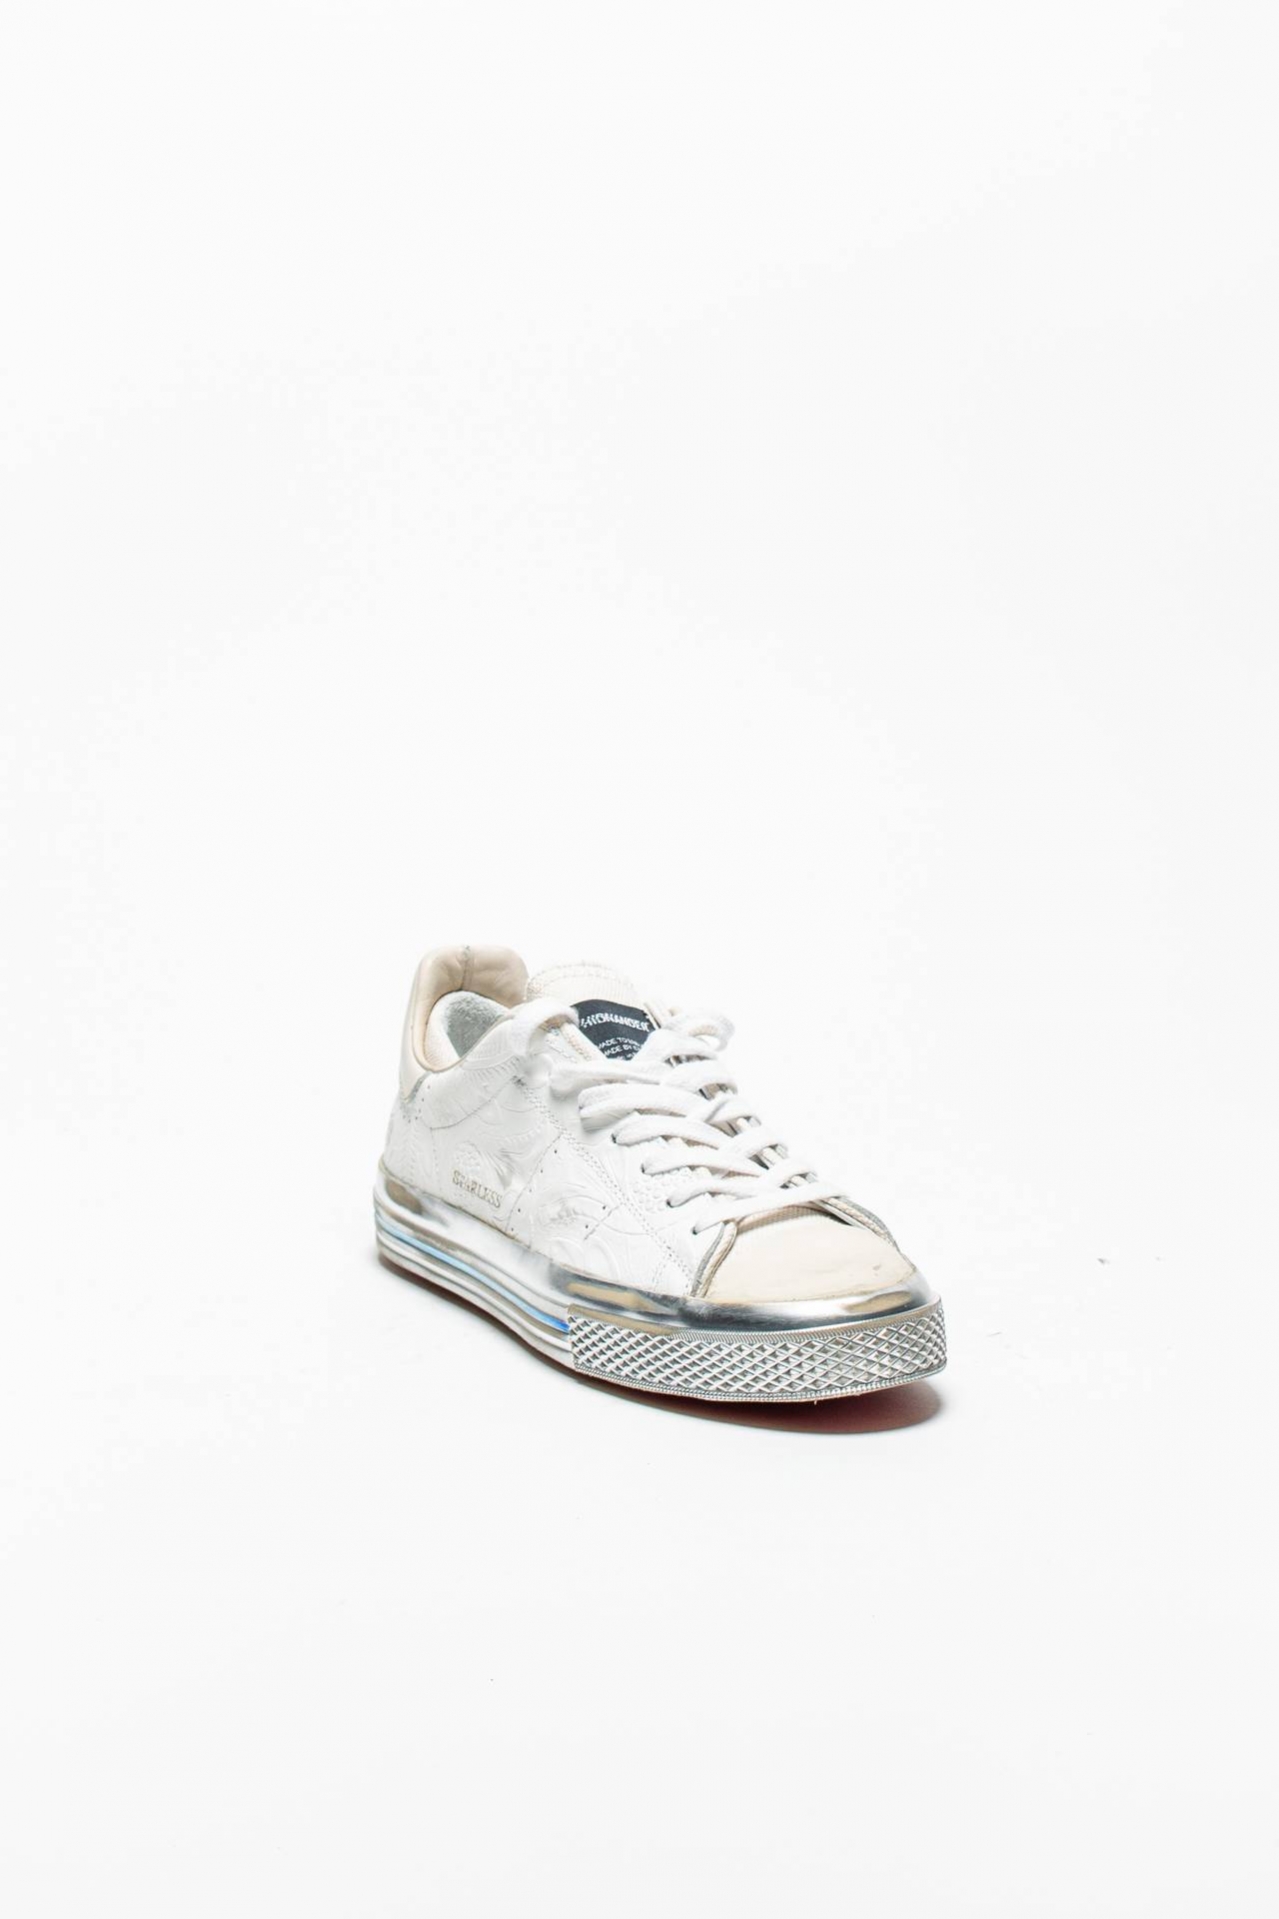 Sneaker STARLESS LOW - 048